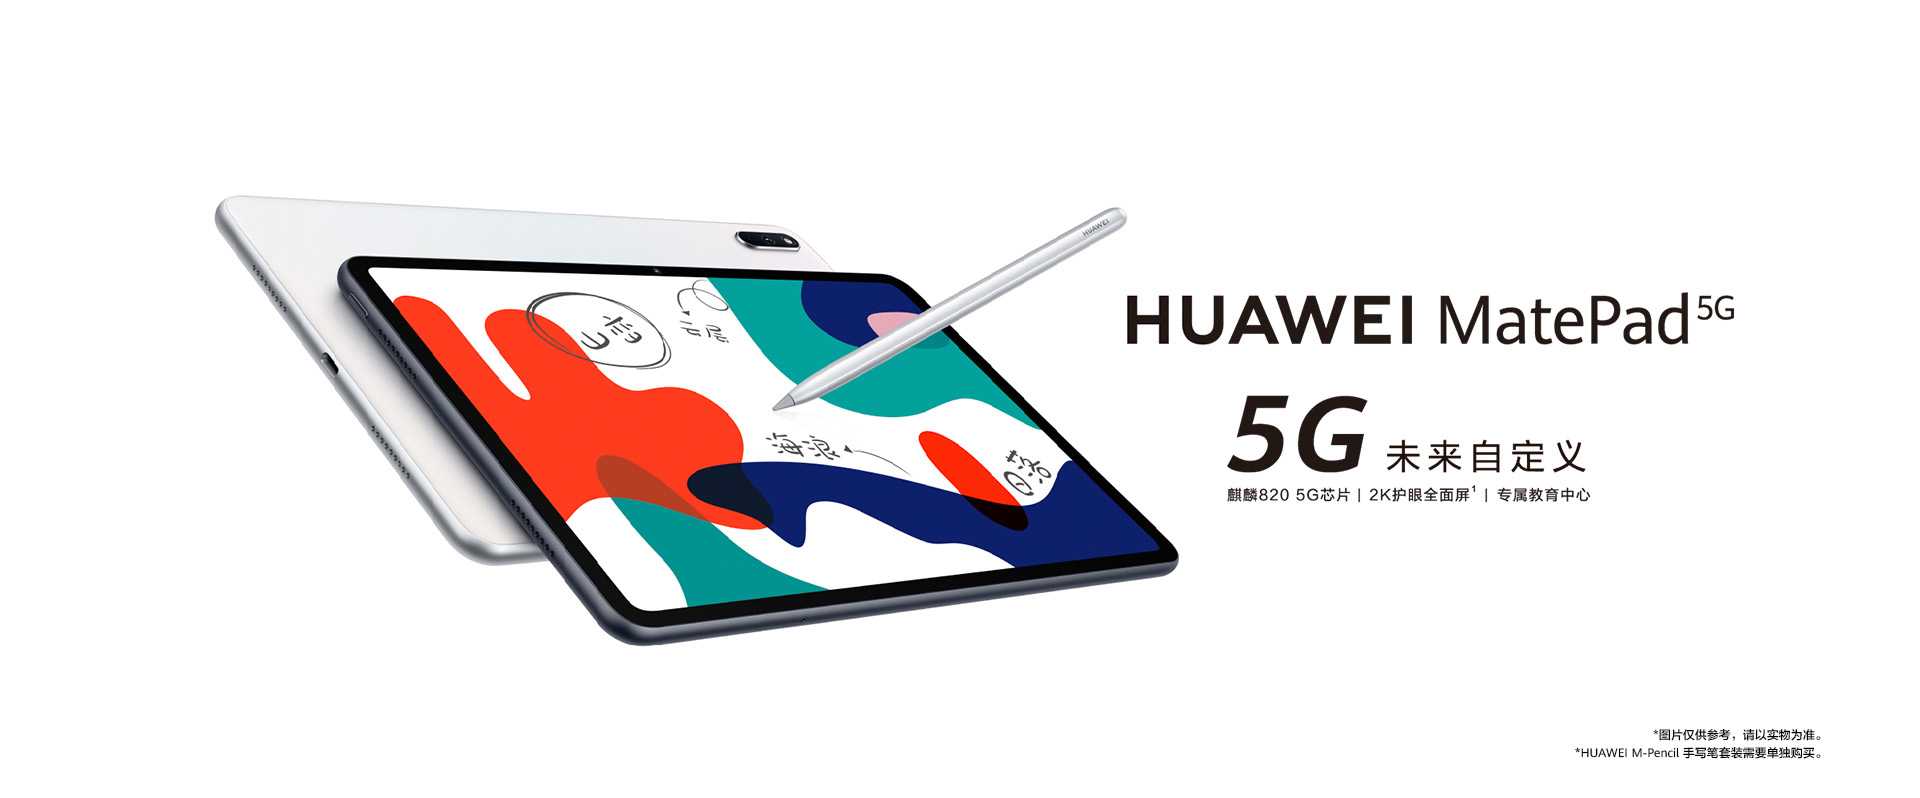 Huawei matepad lte (2020) vs huawei matepad pro wi-fi (2019)